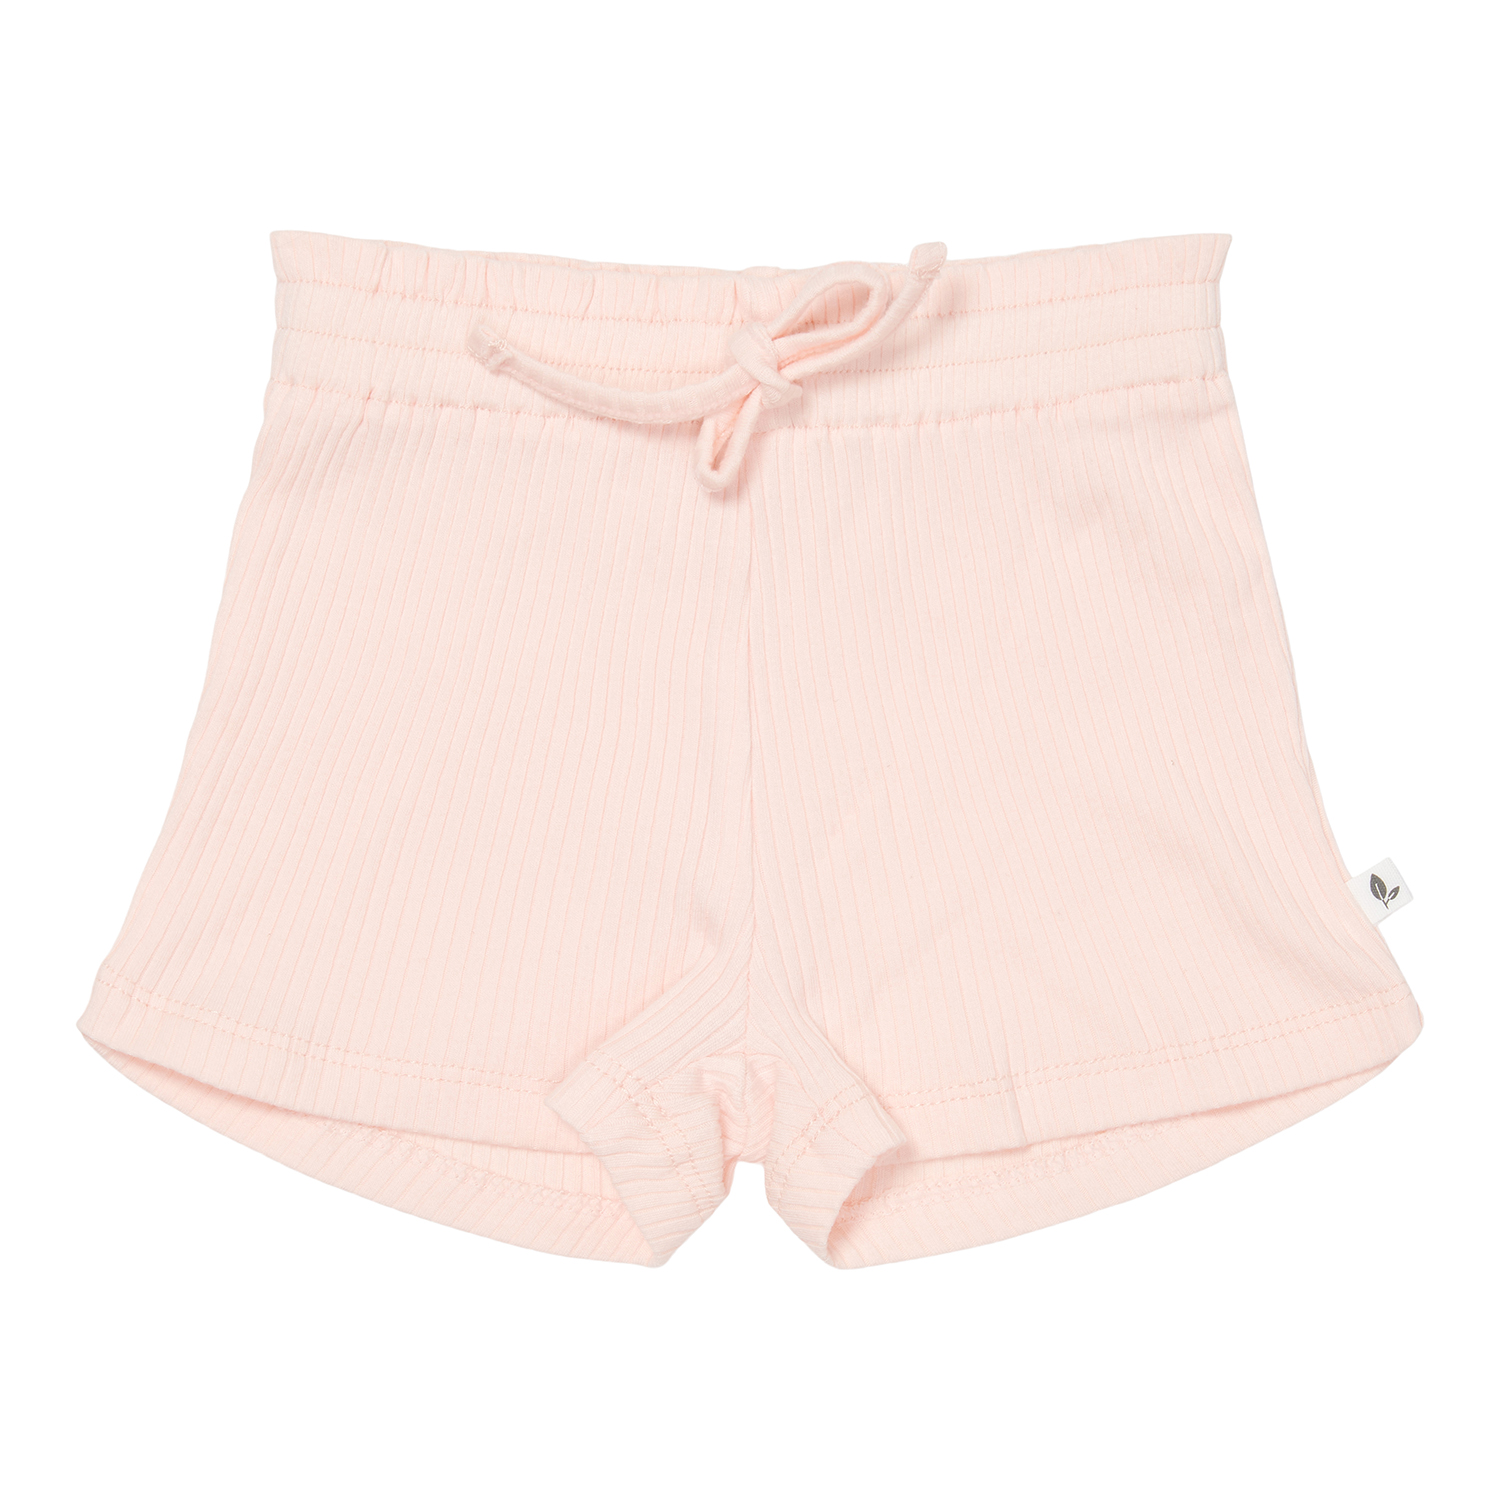 Kurze Hose / Shorts Rippe Pure soft pink (Gr. 80)